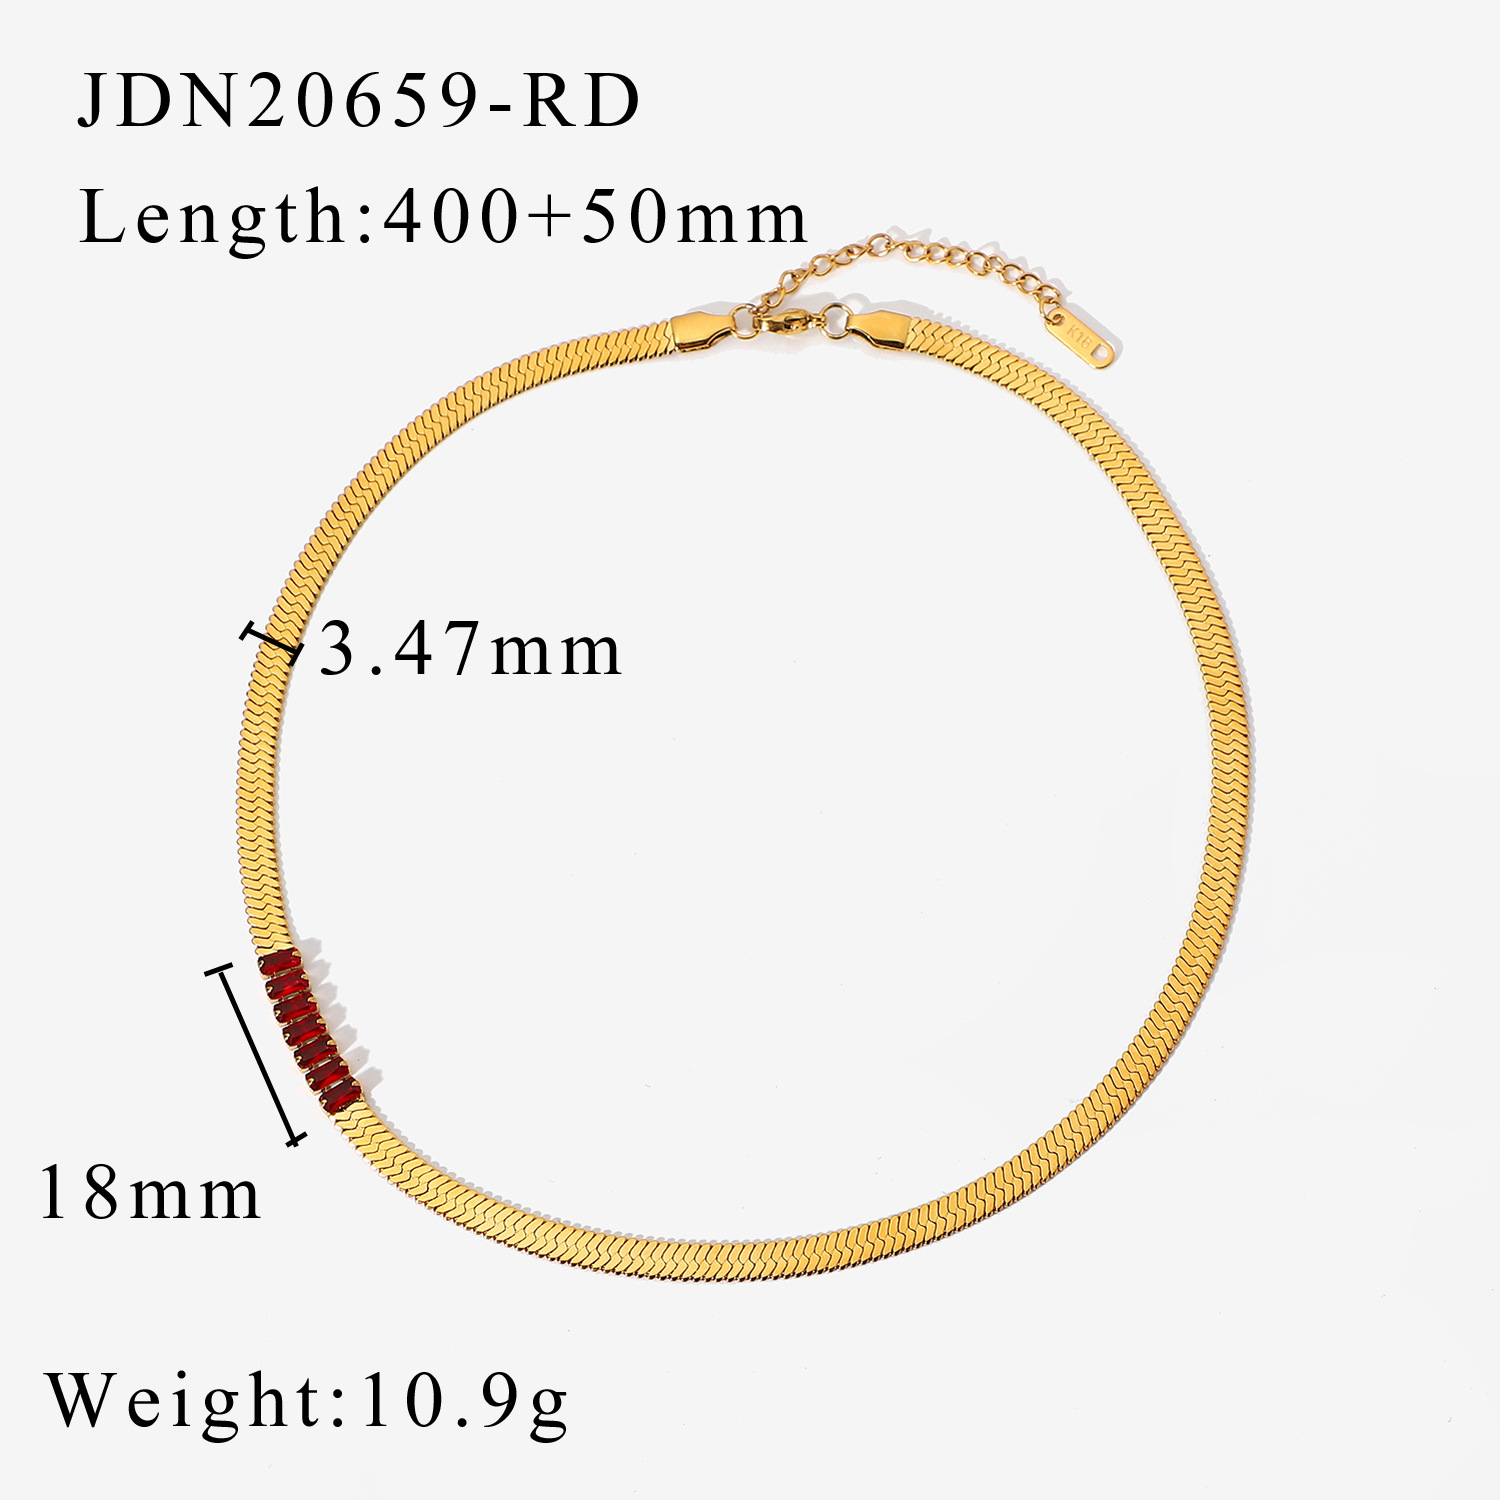 JDN20659-RD